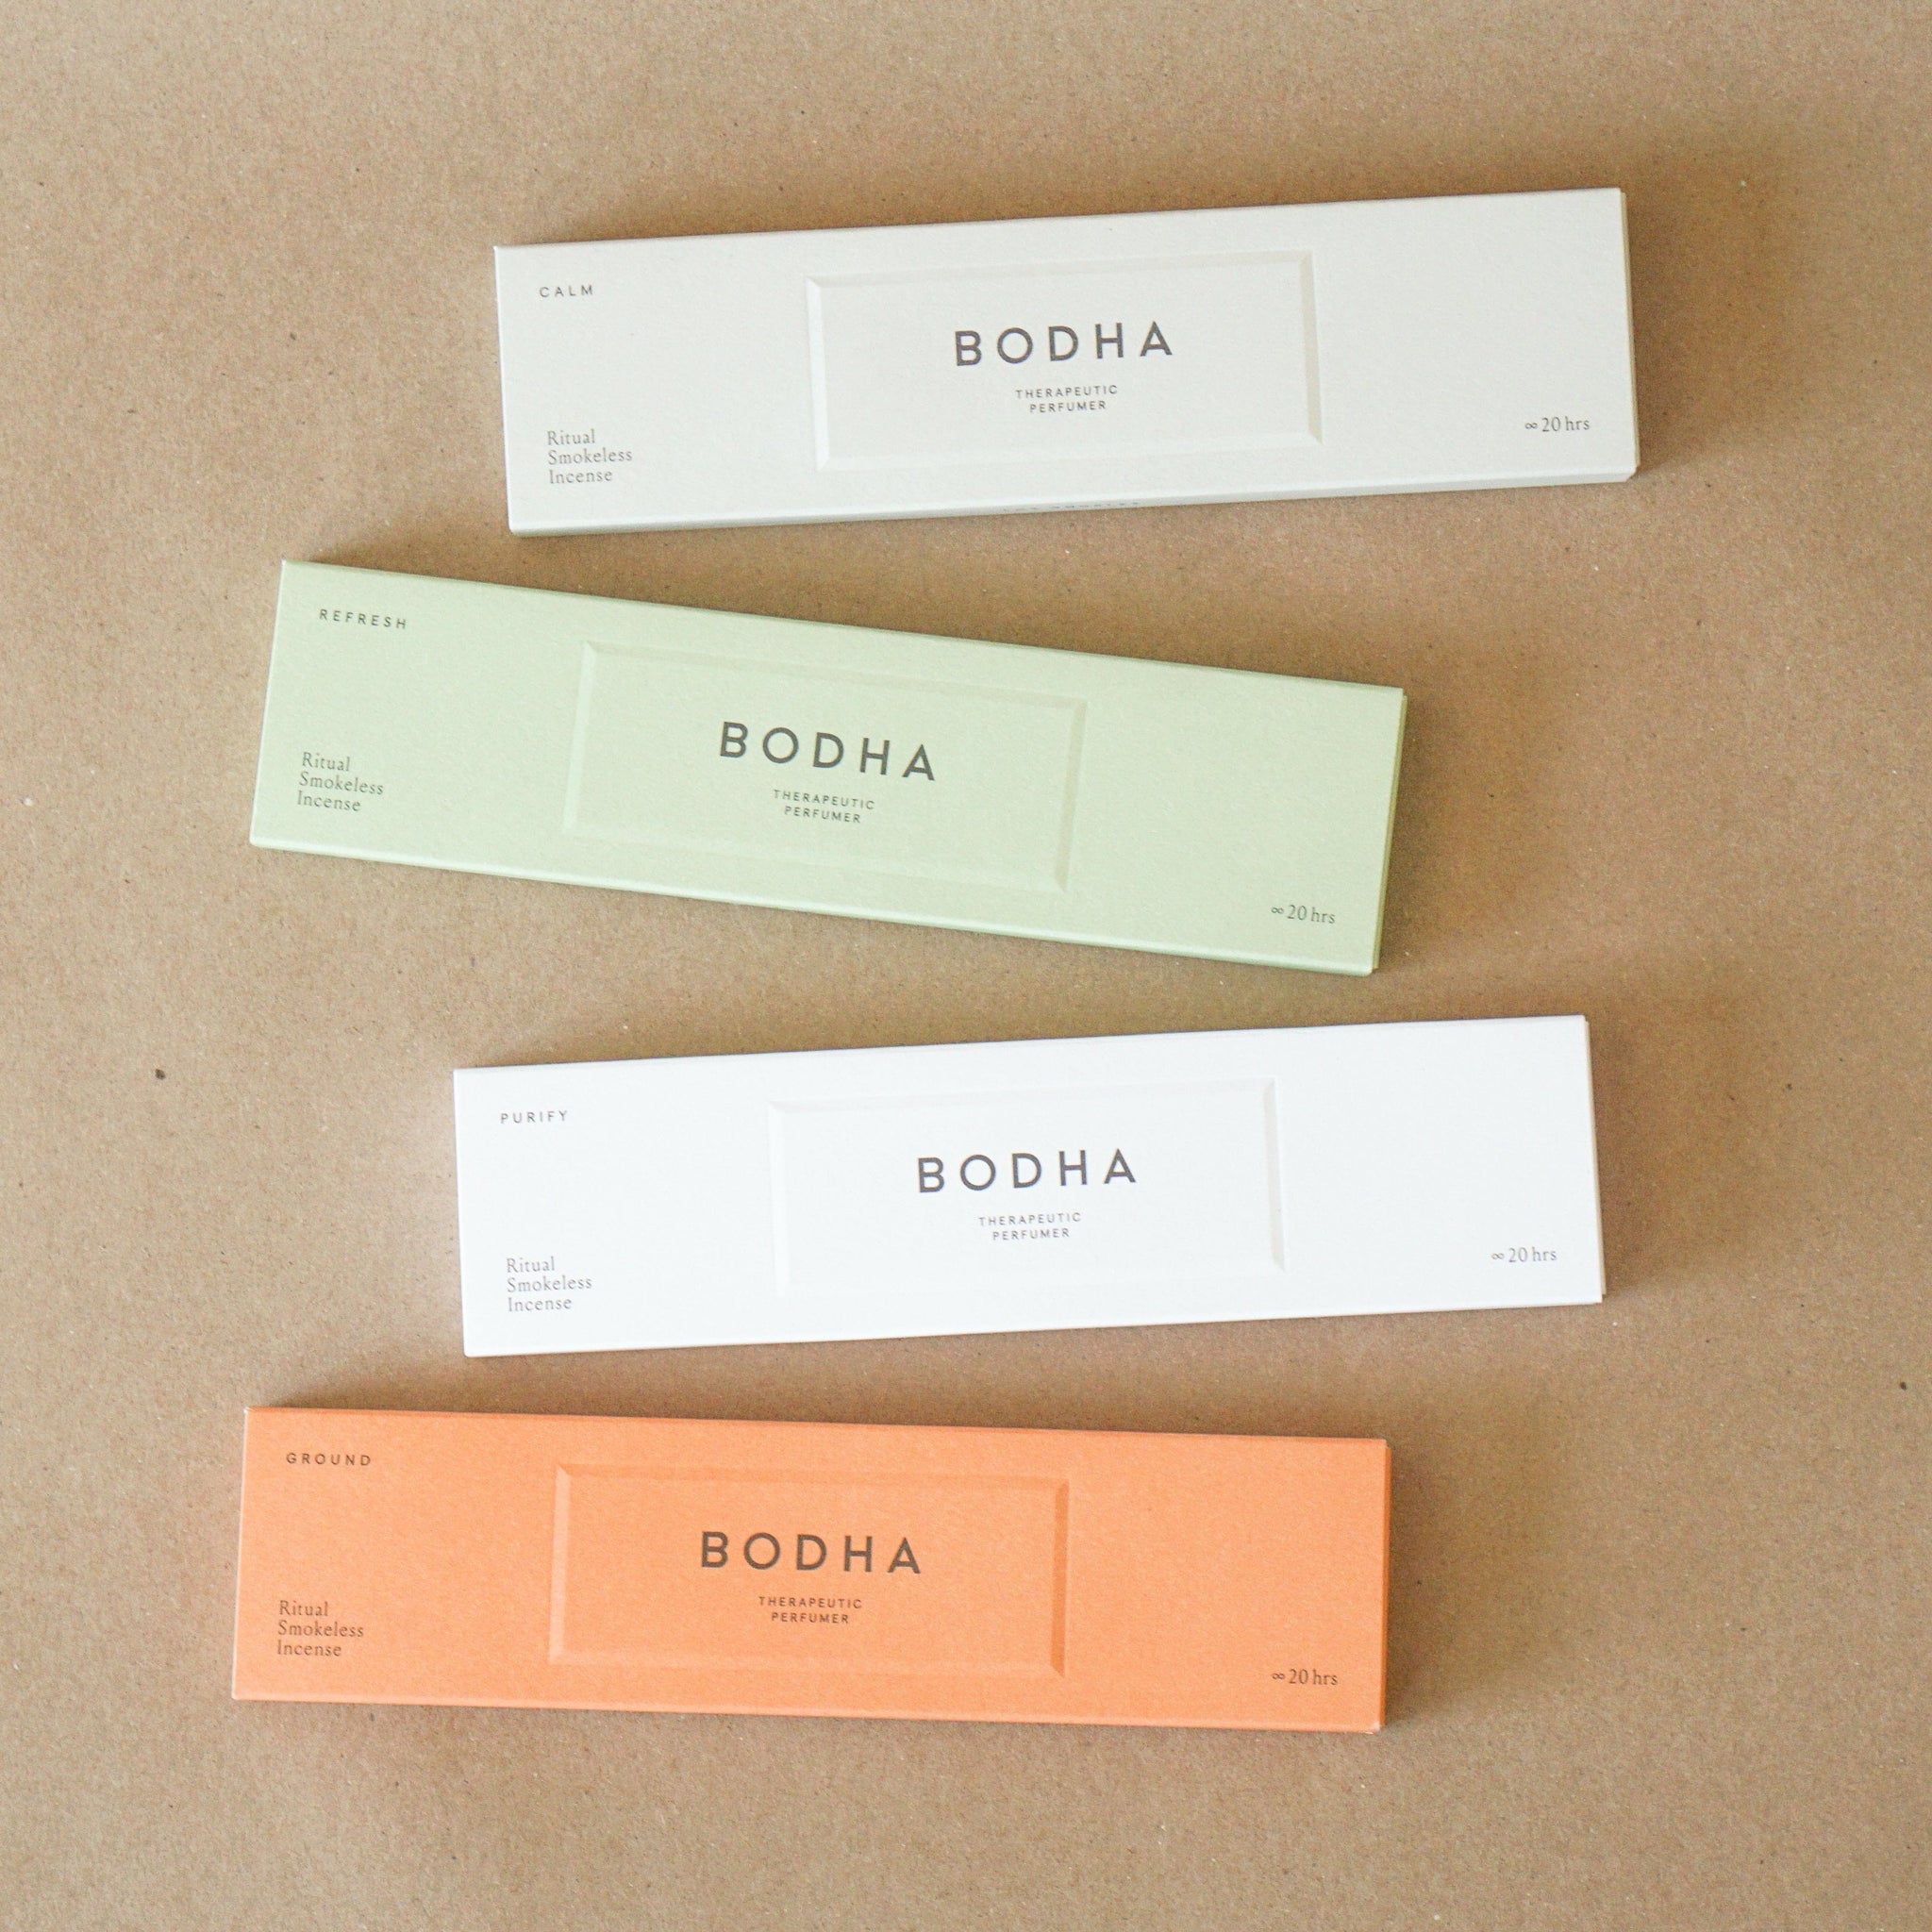 +COOP Holiday Gift Sets Kitchen Bodha Incense Gift Set